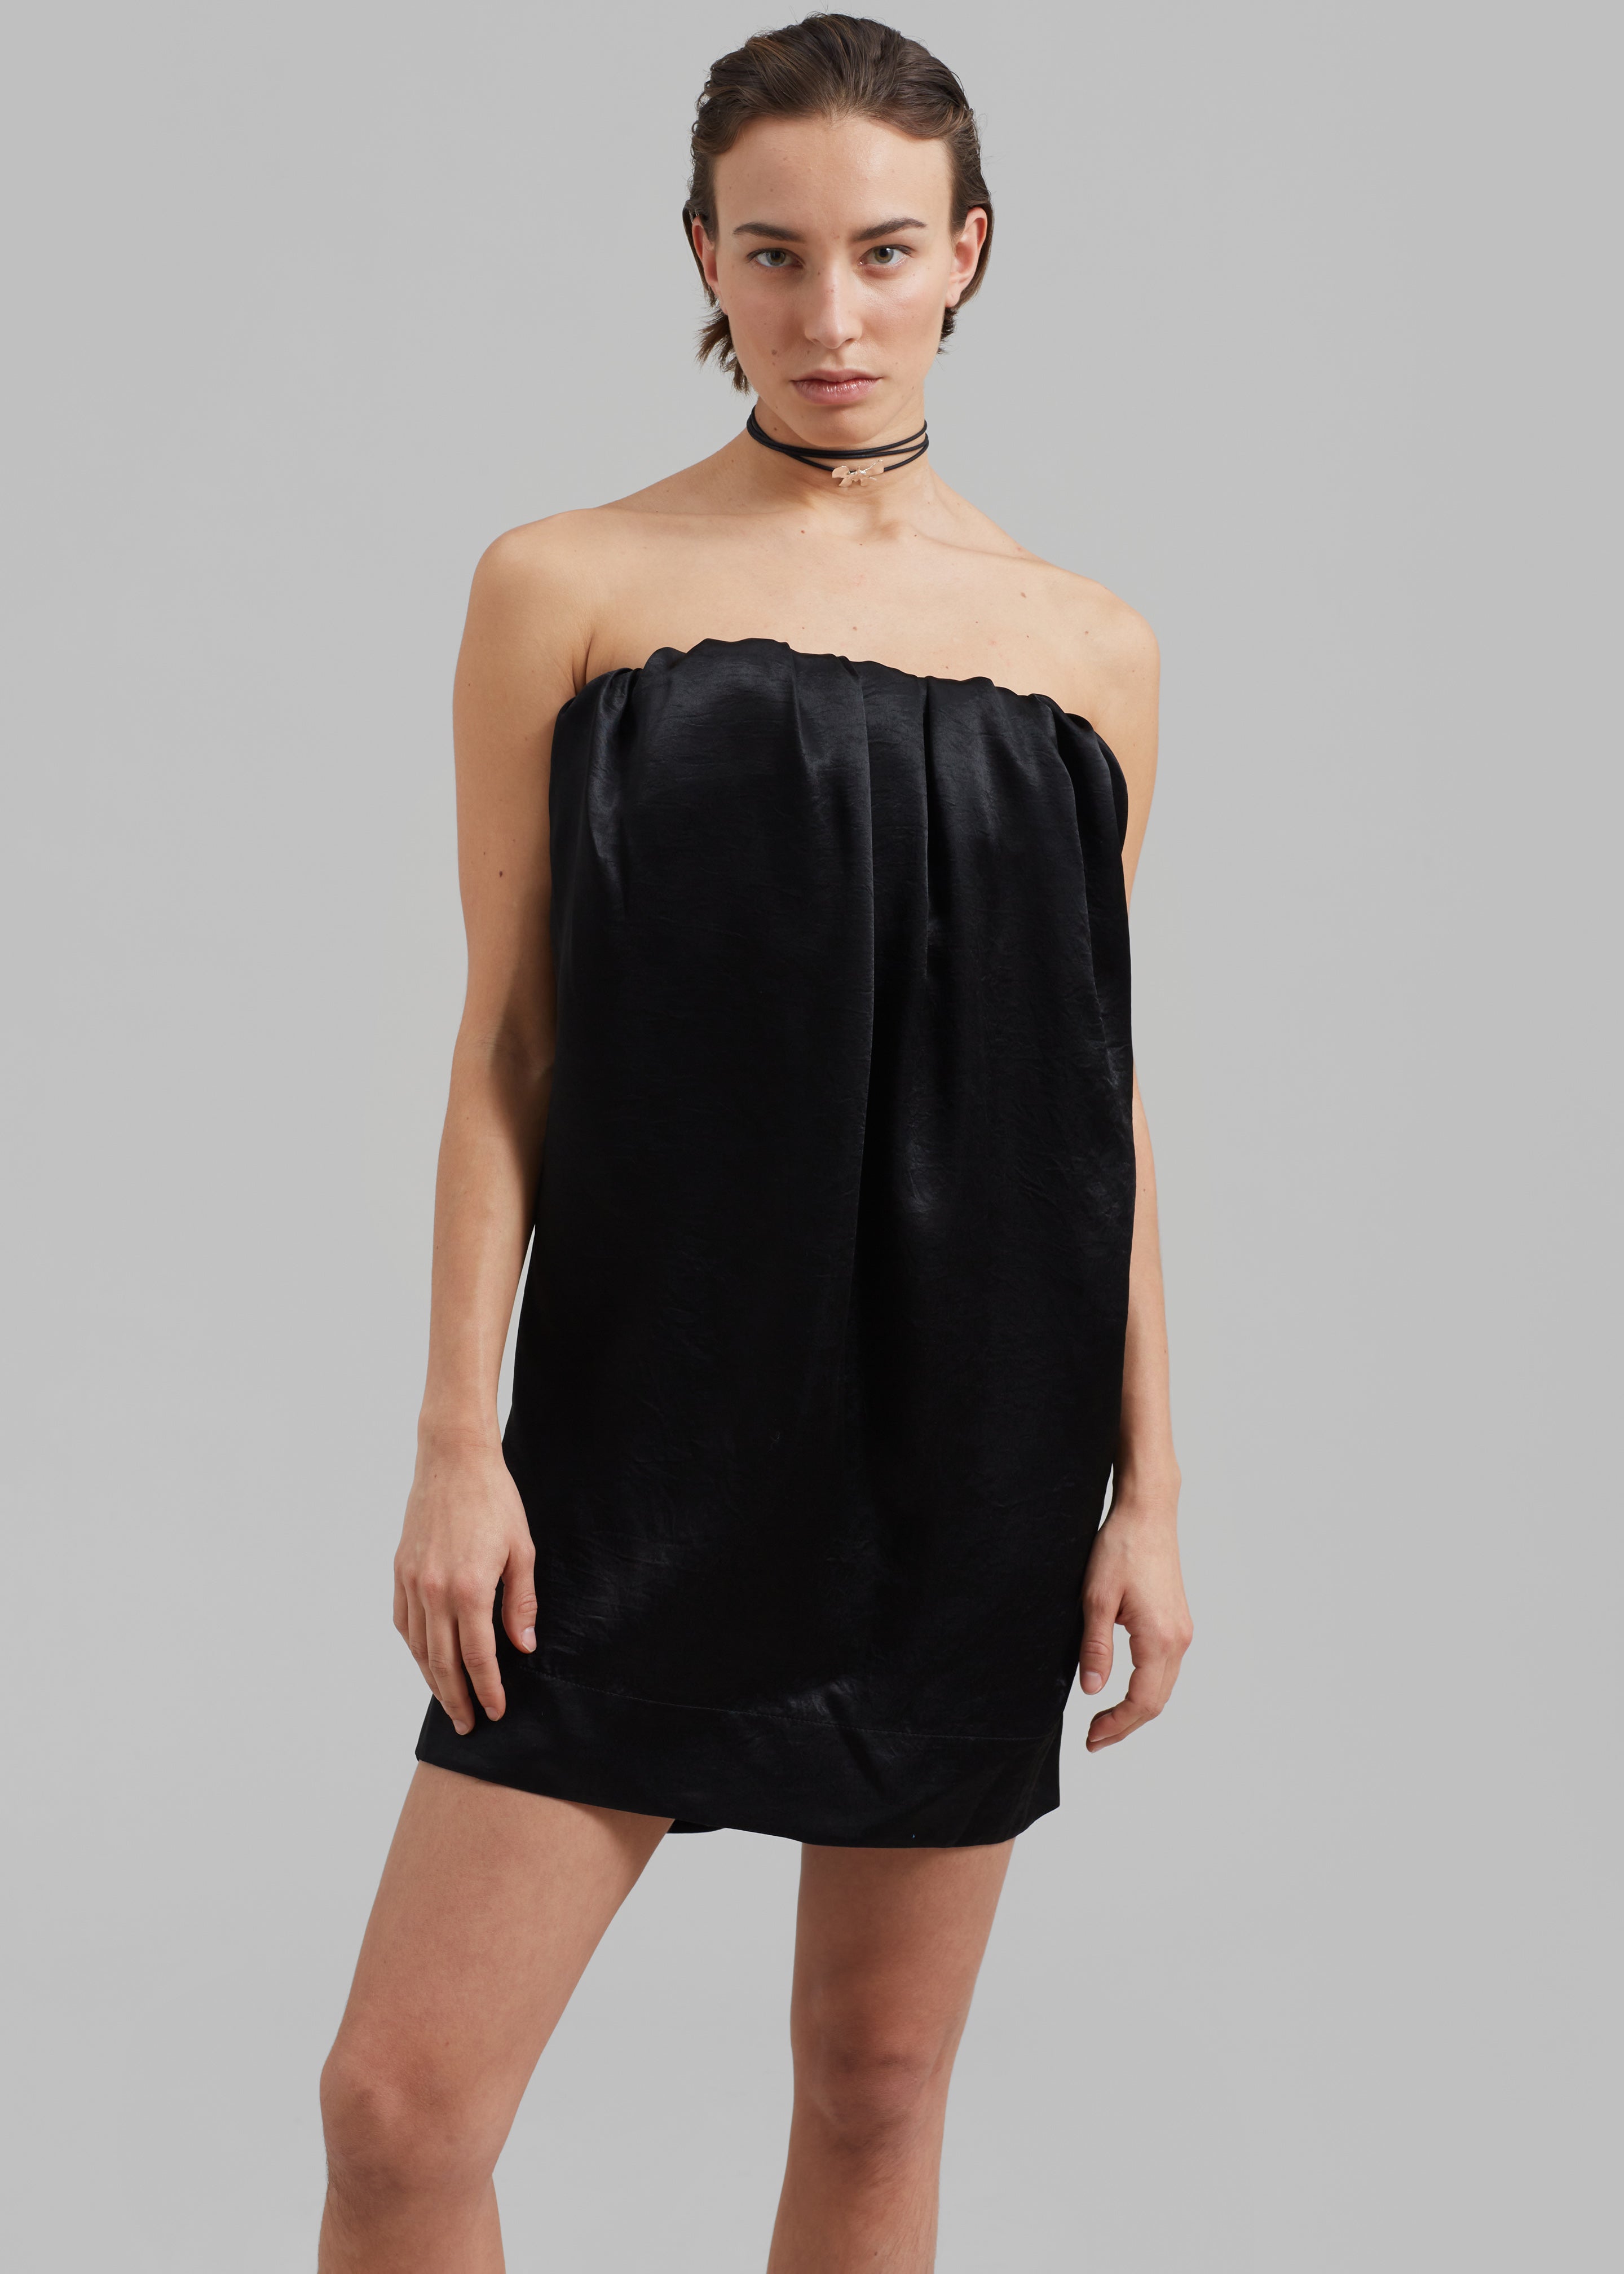 Anna October Sharon Mini Dress - Black - 2